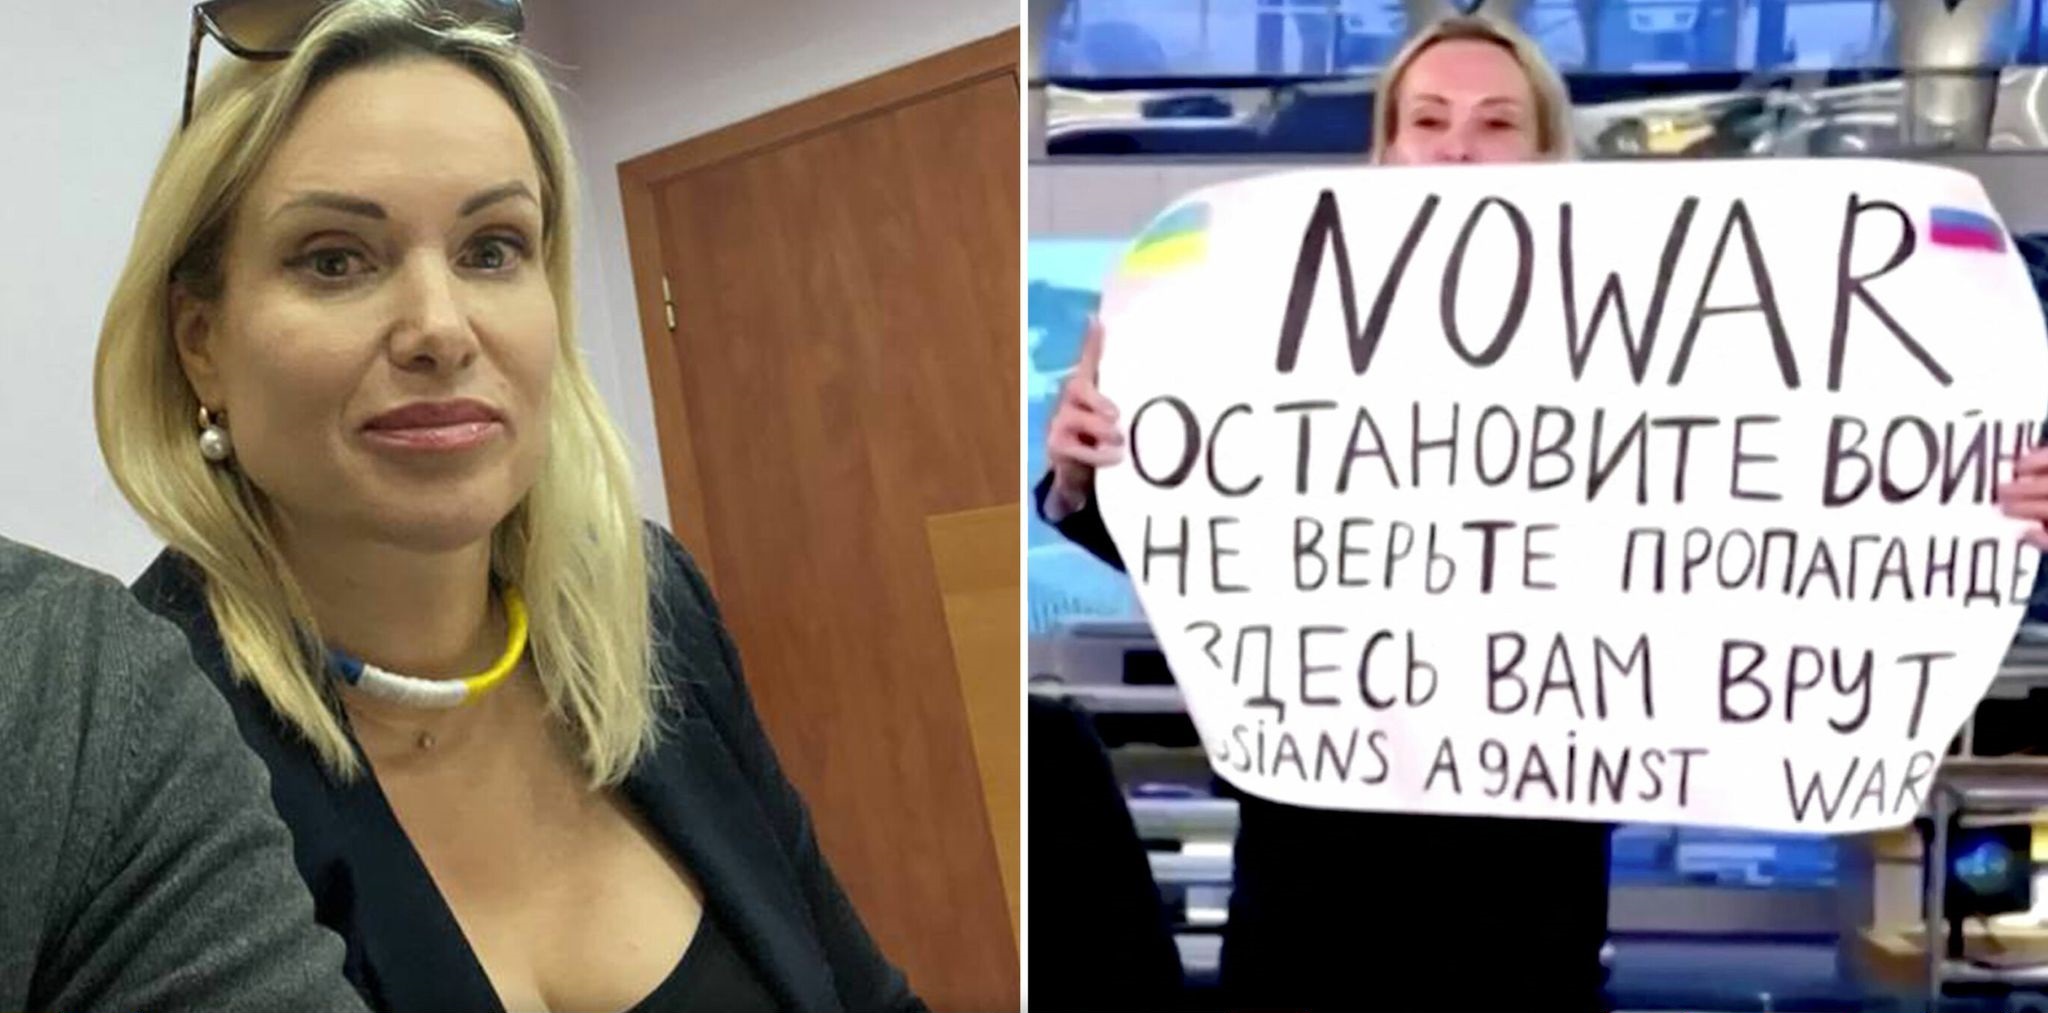 Marina Ovsyannikova: Η Ρωσίδα δημοσιογράφος αρνείται να φύγει από την χώρα – “Είμαι πατριώτισσα”